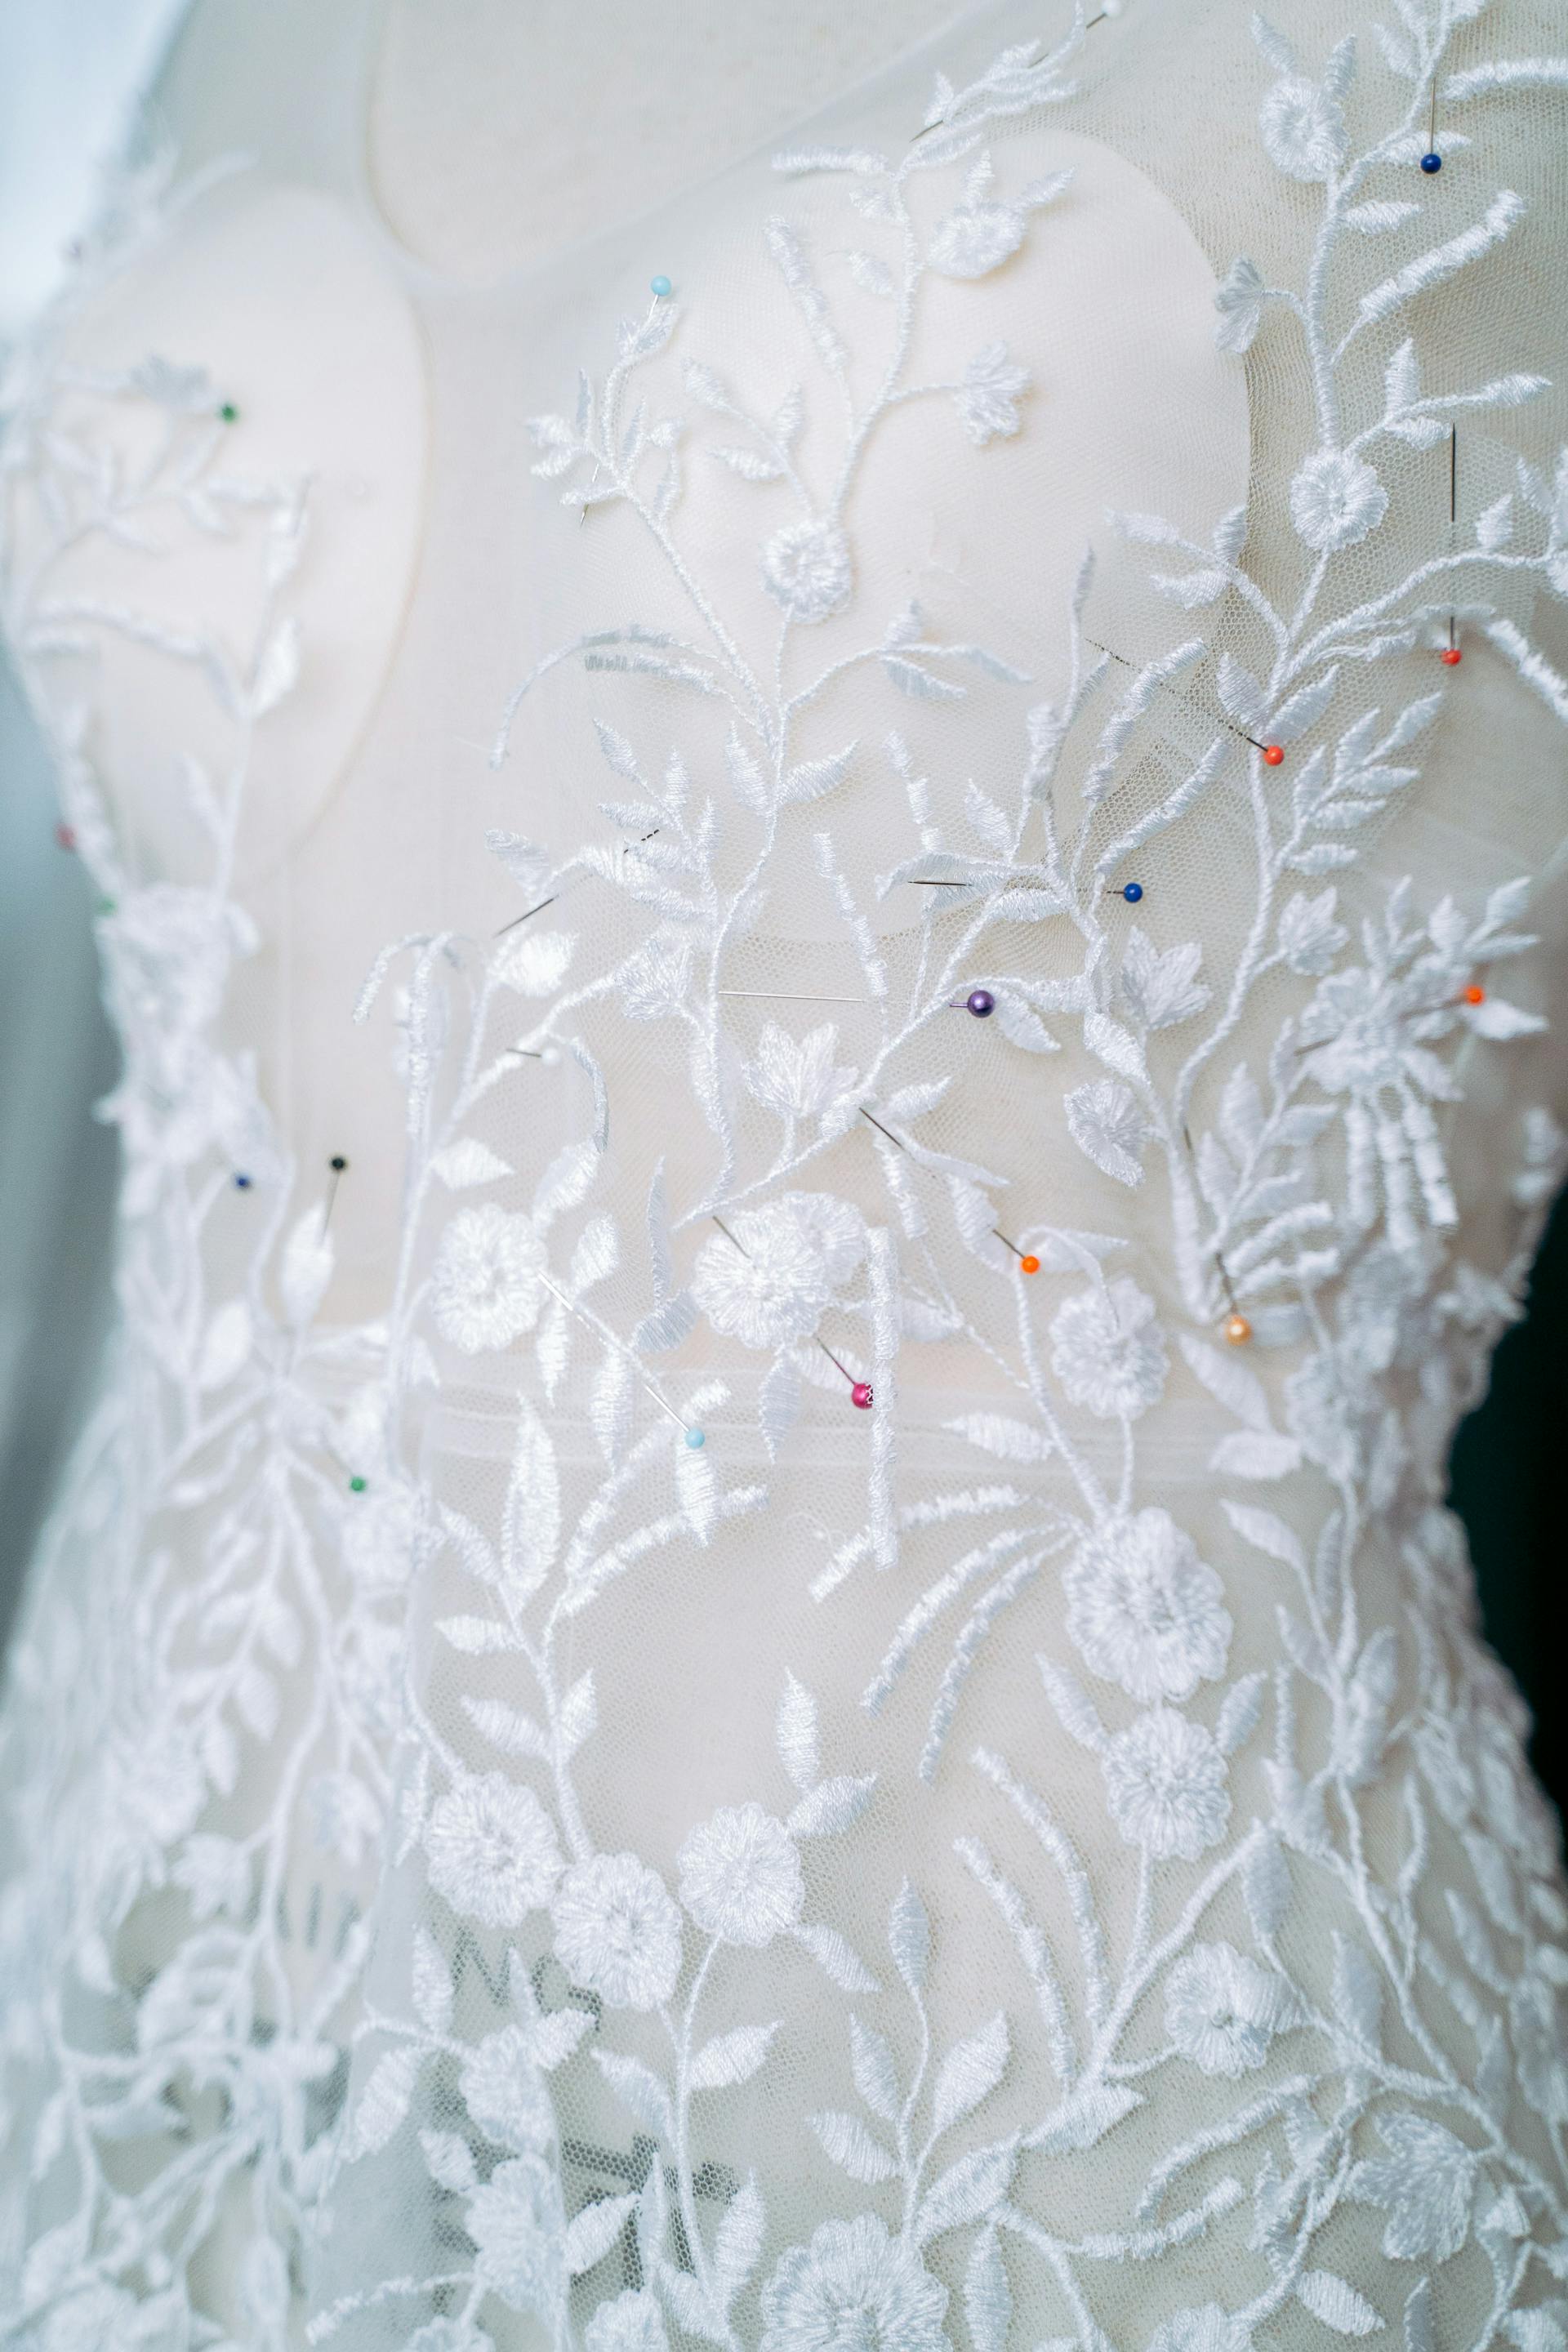 A close-up shot of a wedding dress | Source: Pexels